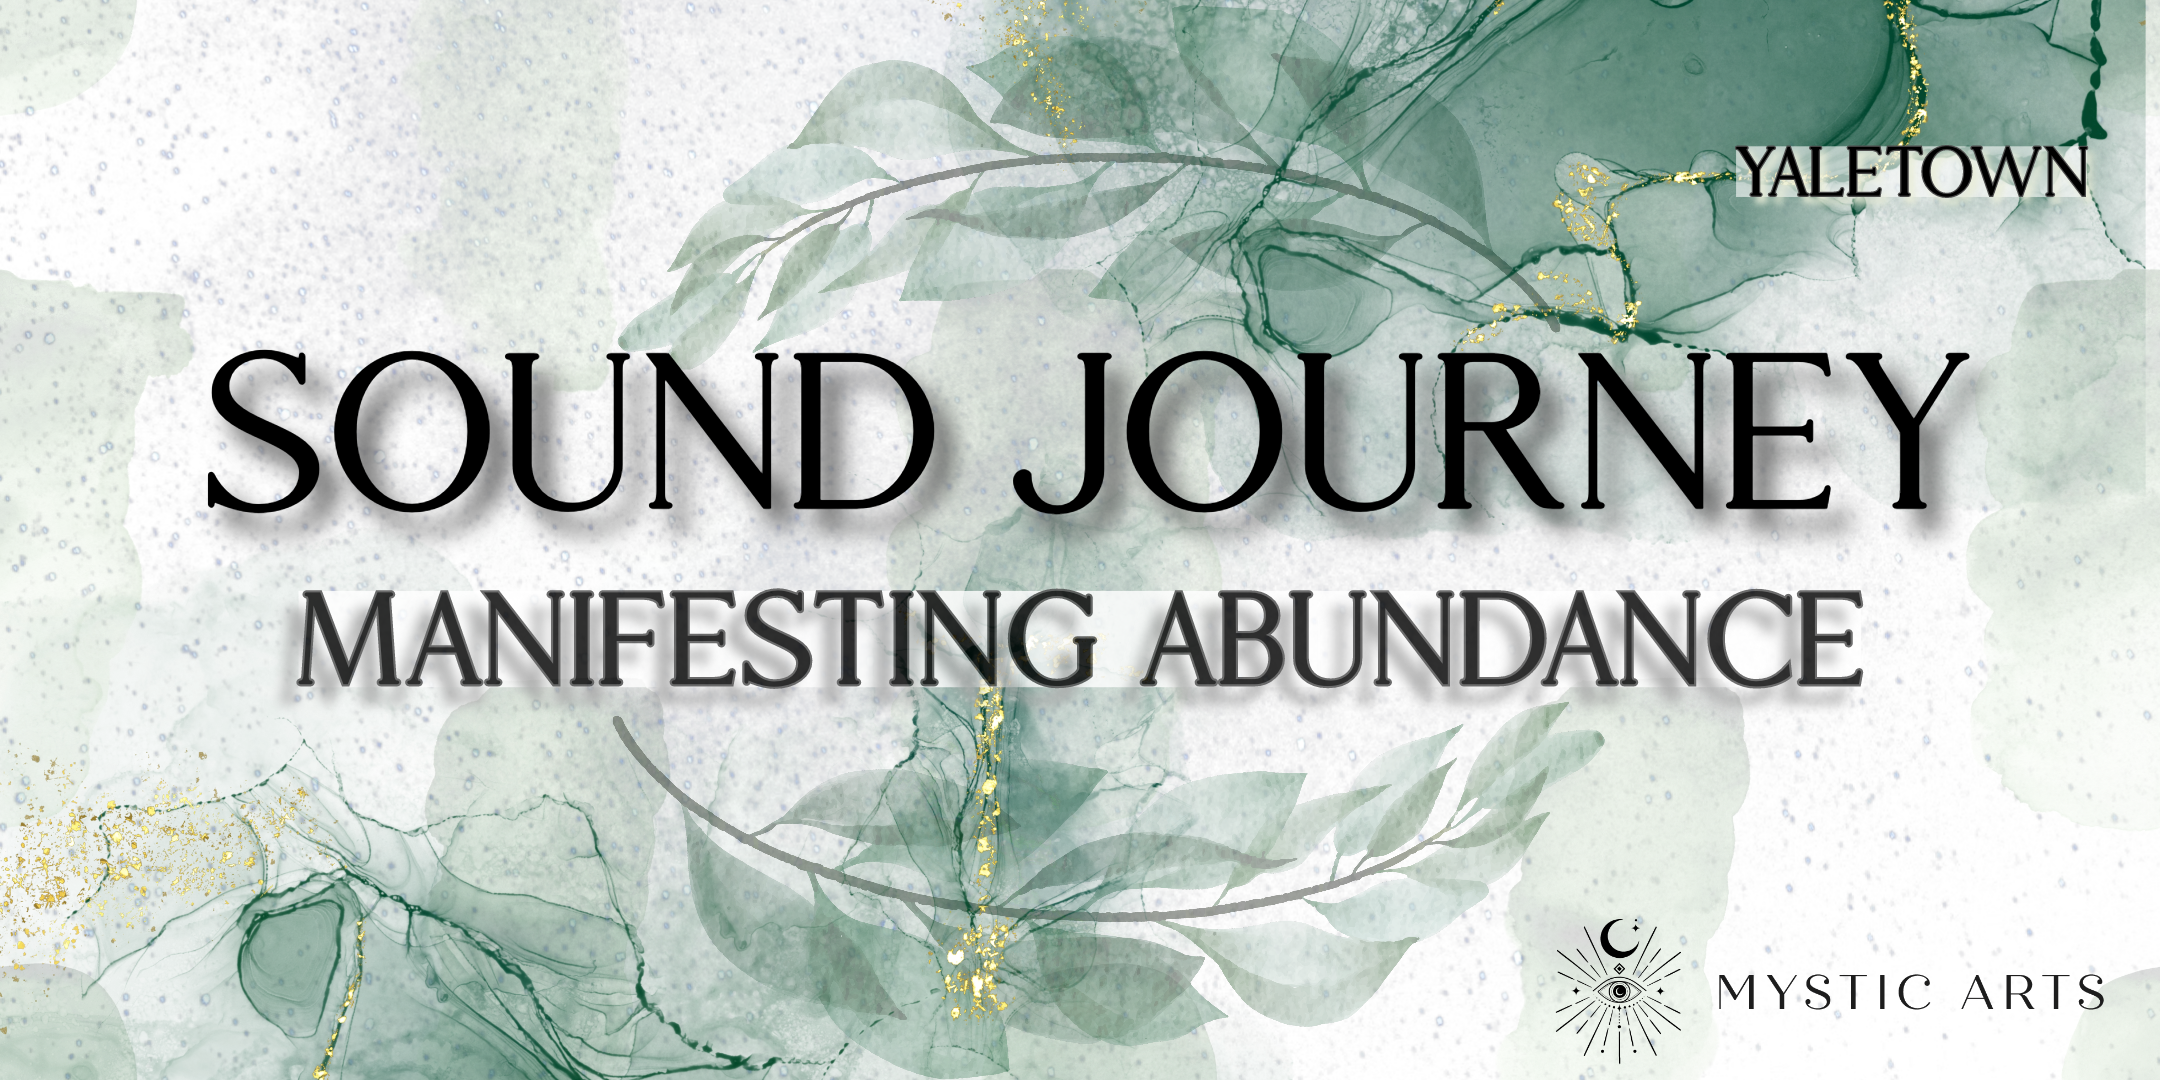 Sound Journey for Manifesting Abundance